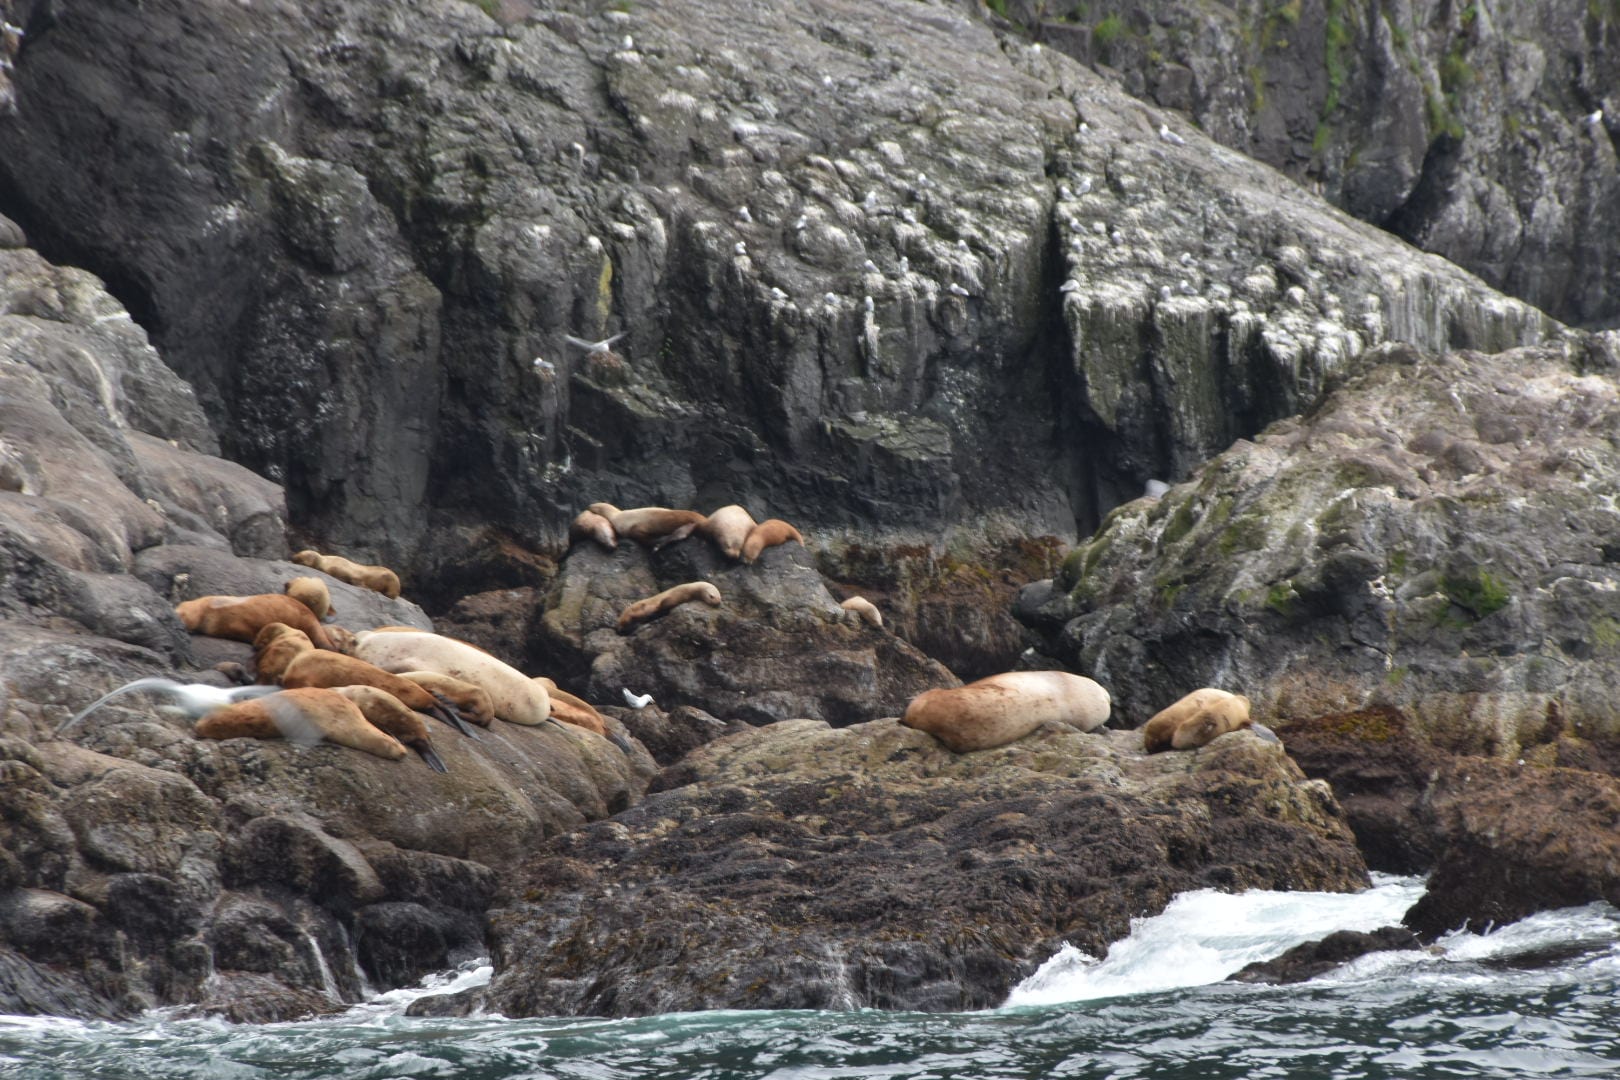 Wildlife at Kenai Fjords National Park